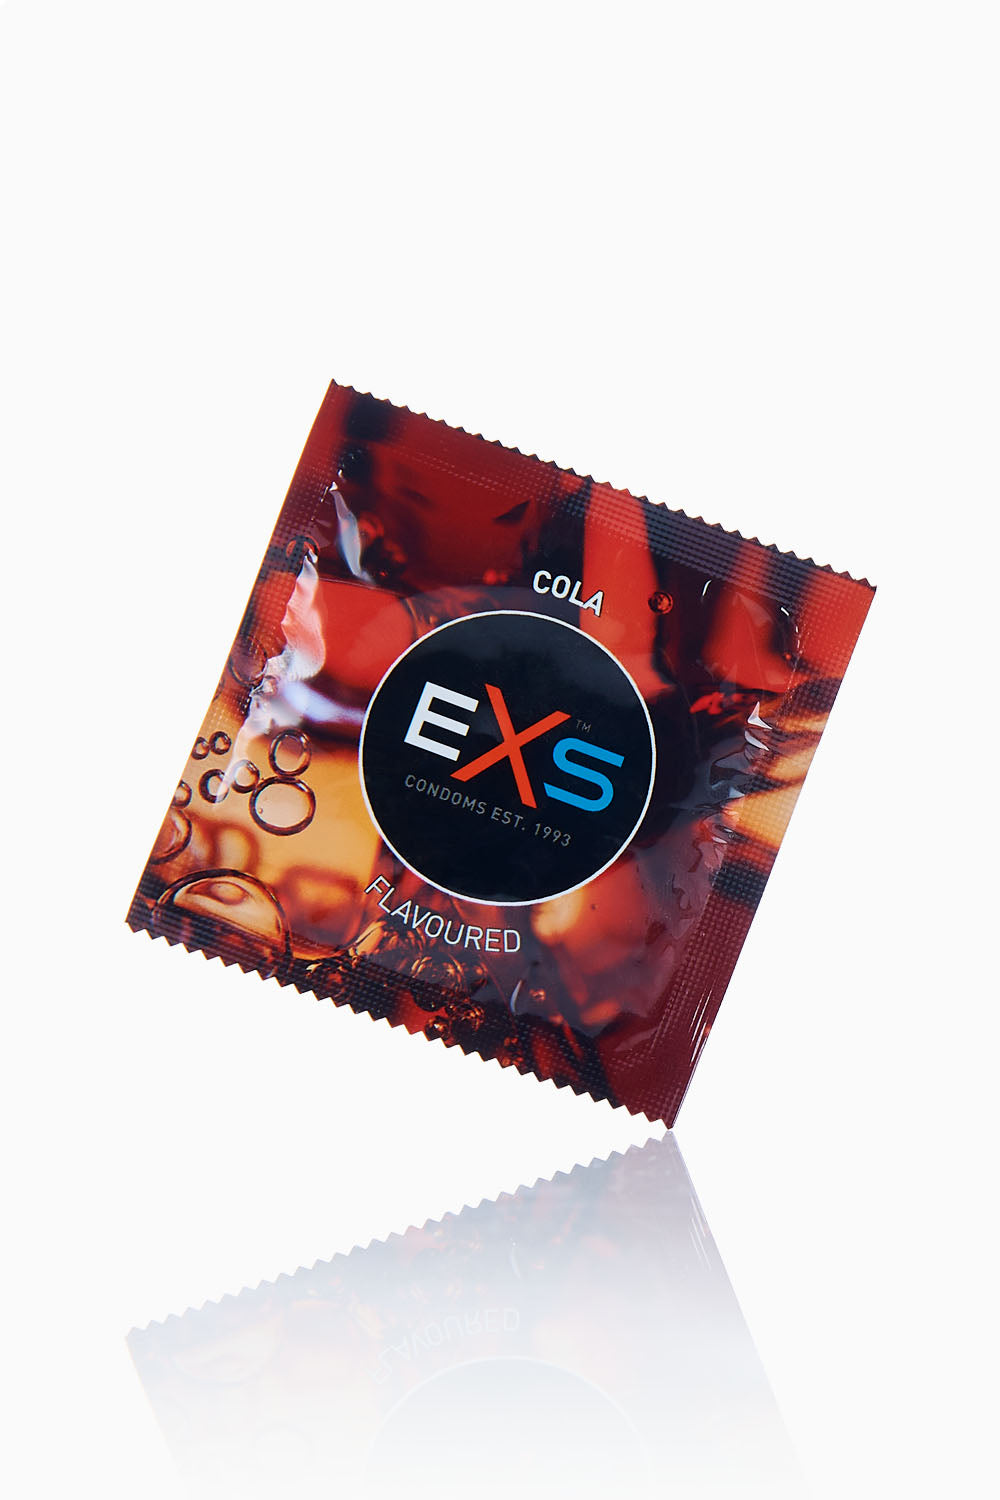 EXS Cola Condoms 100 Pack